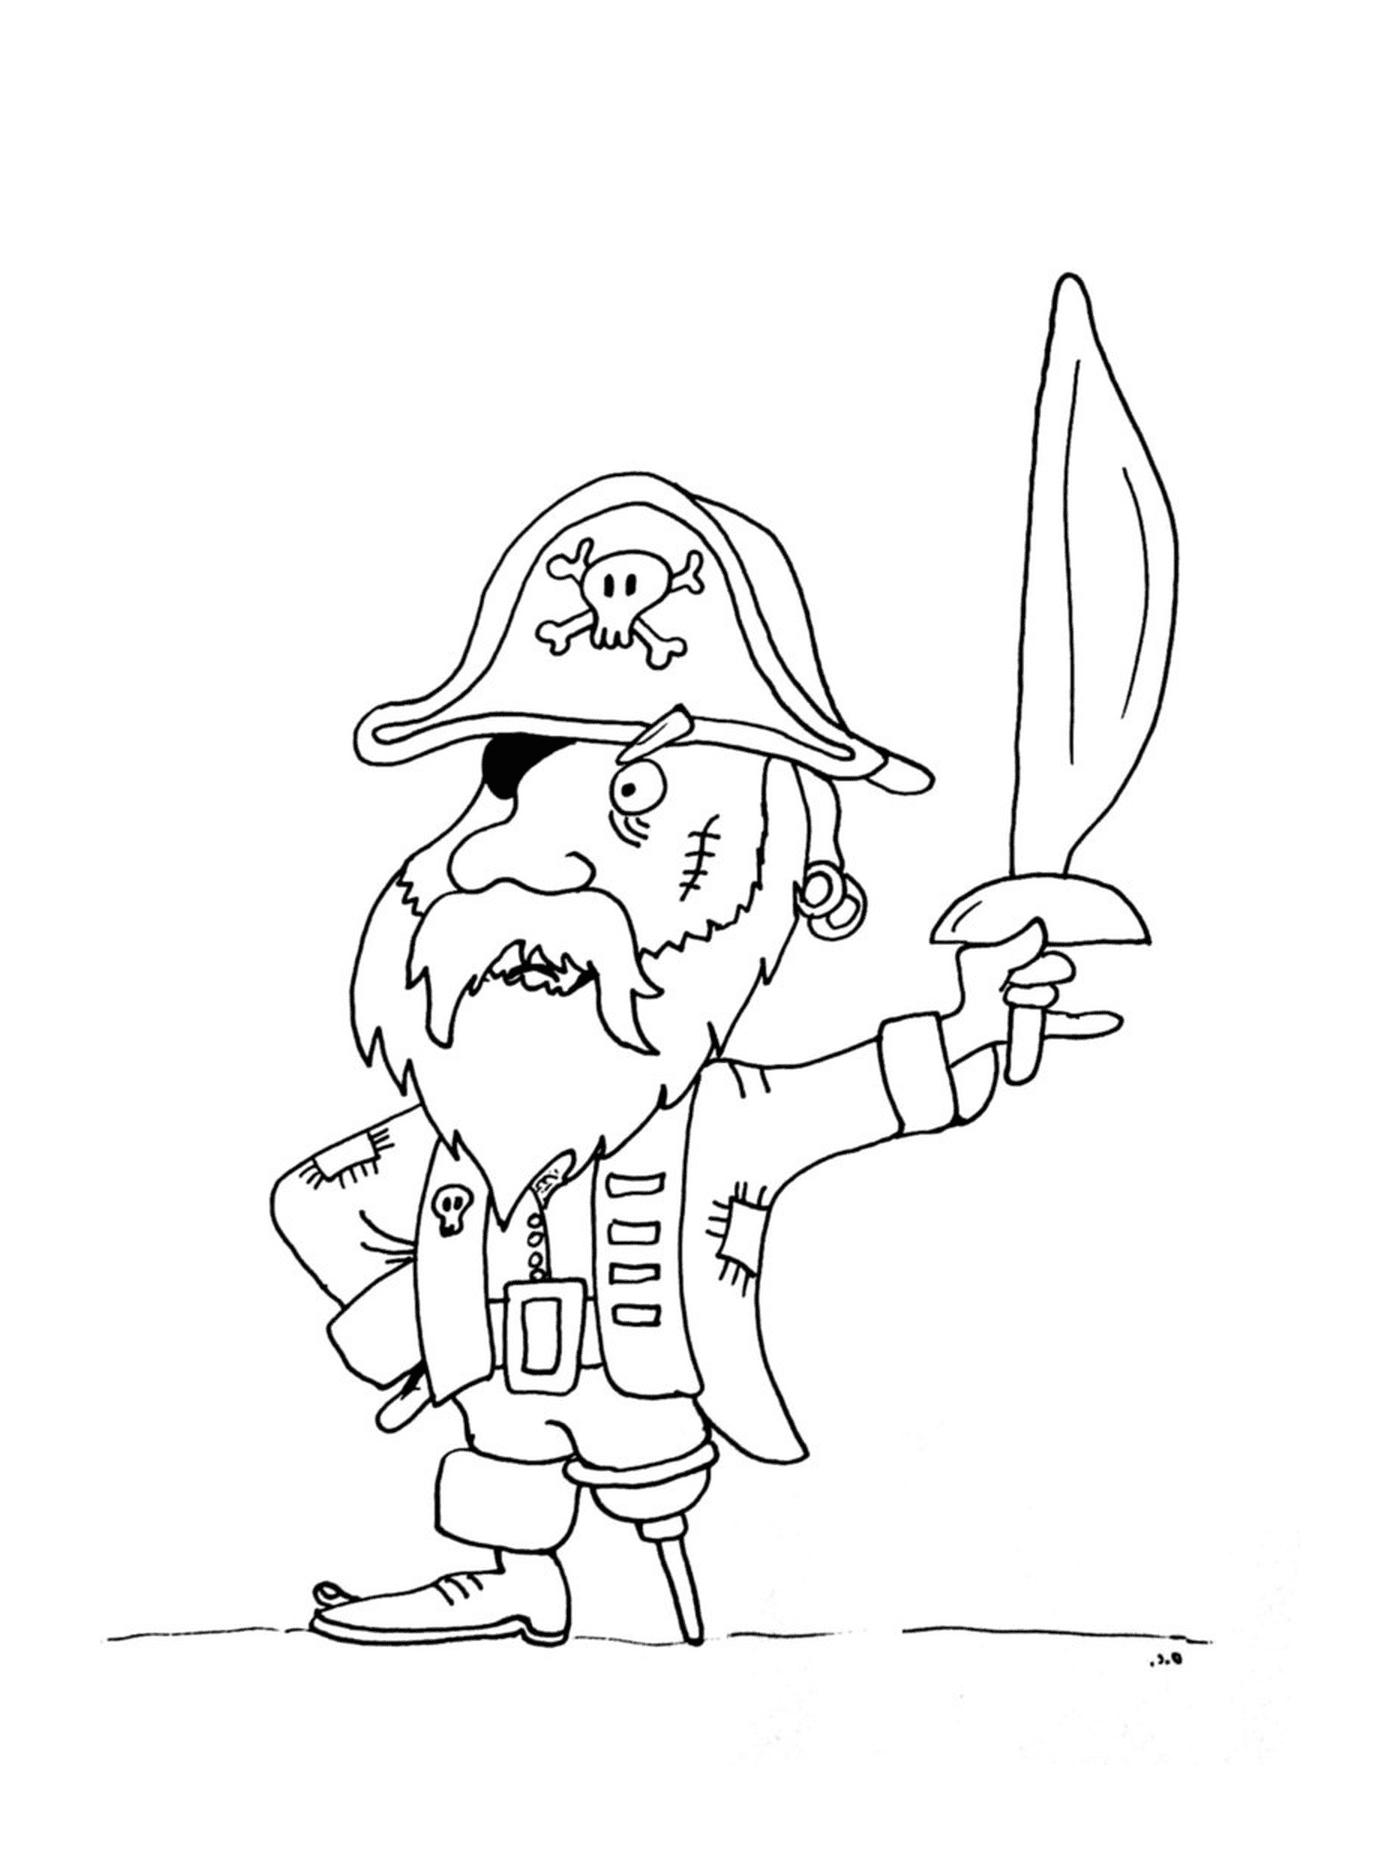   Pirate avec jambe en bois courageux 